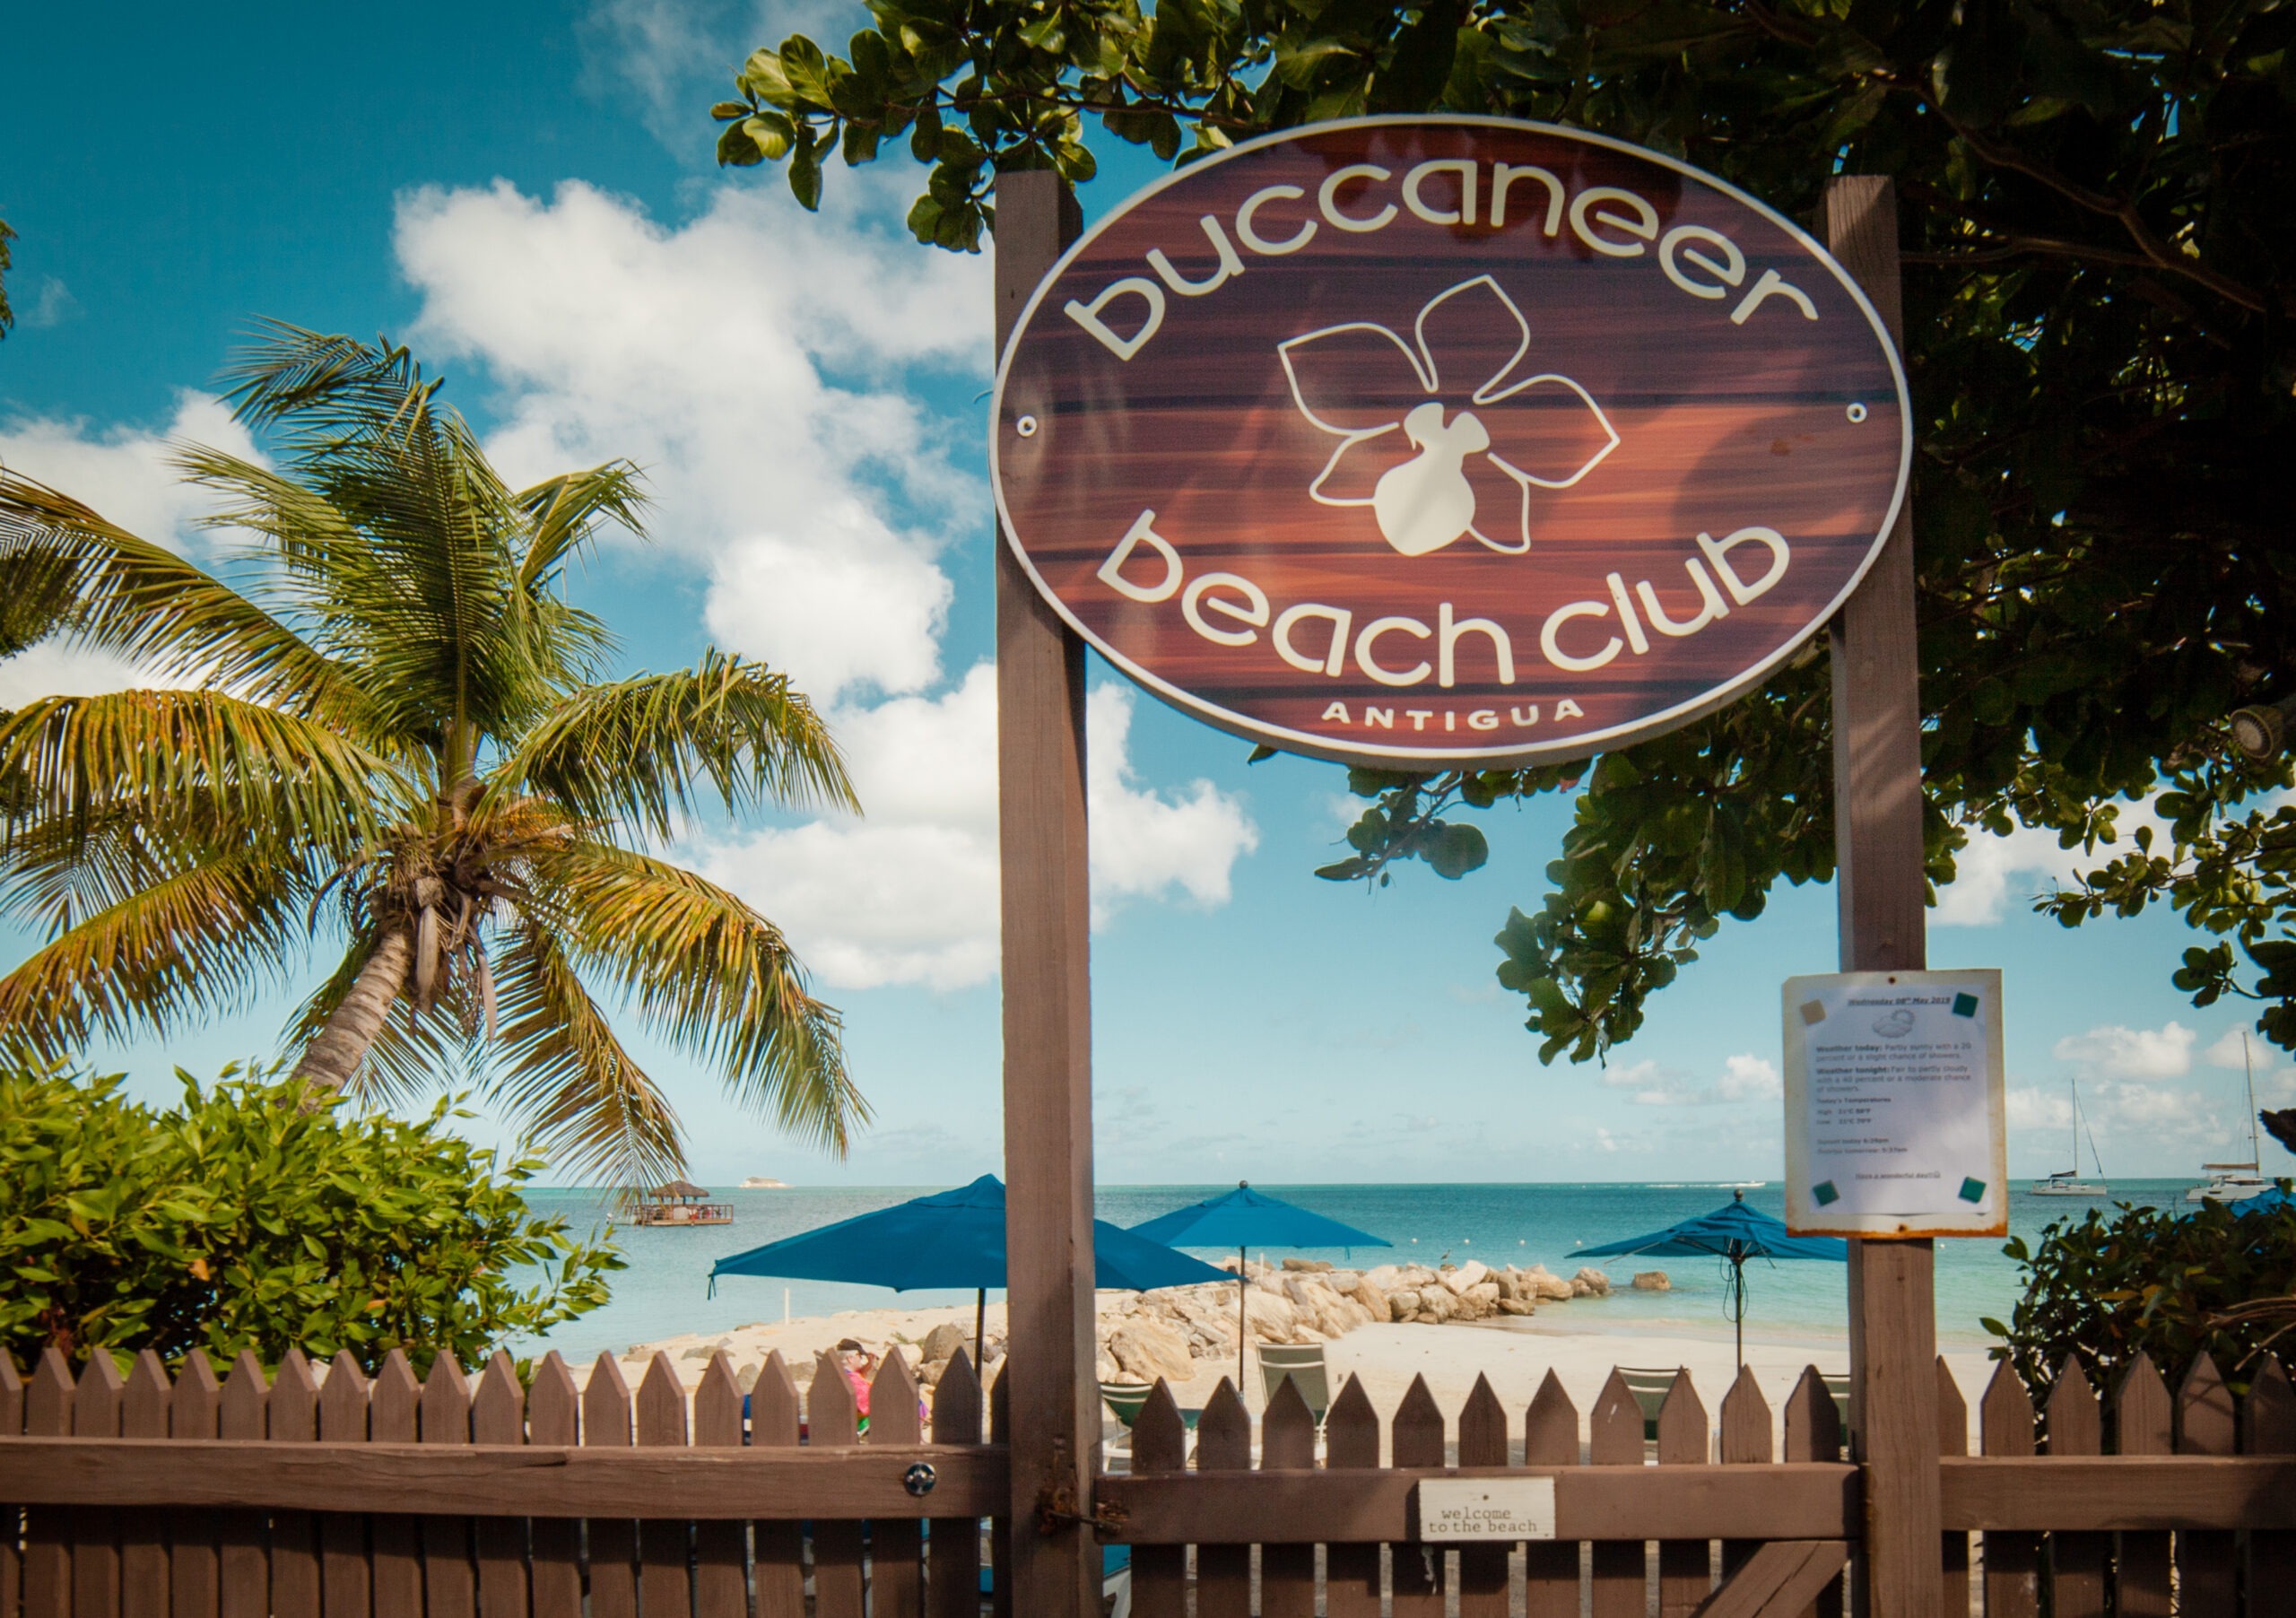 Buccaneer Beach Club – Visit Antigua & Barbuda